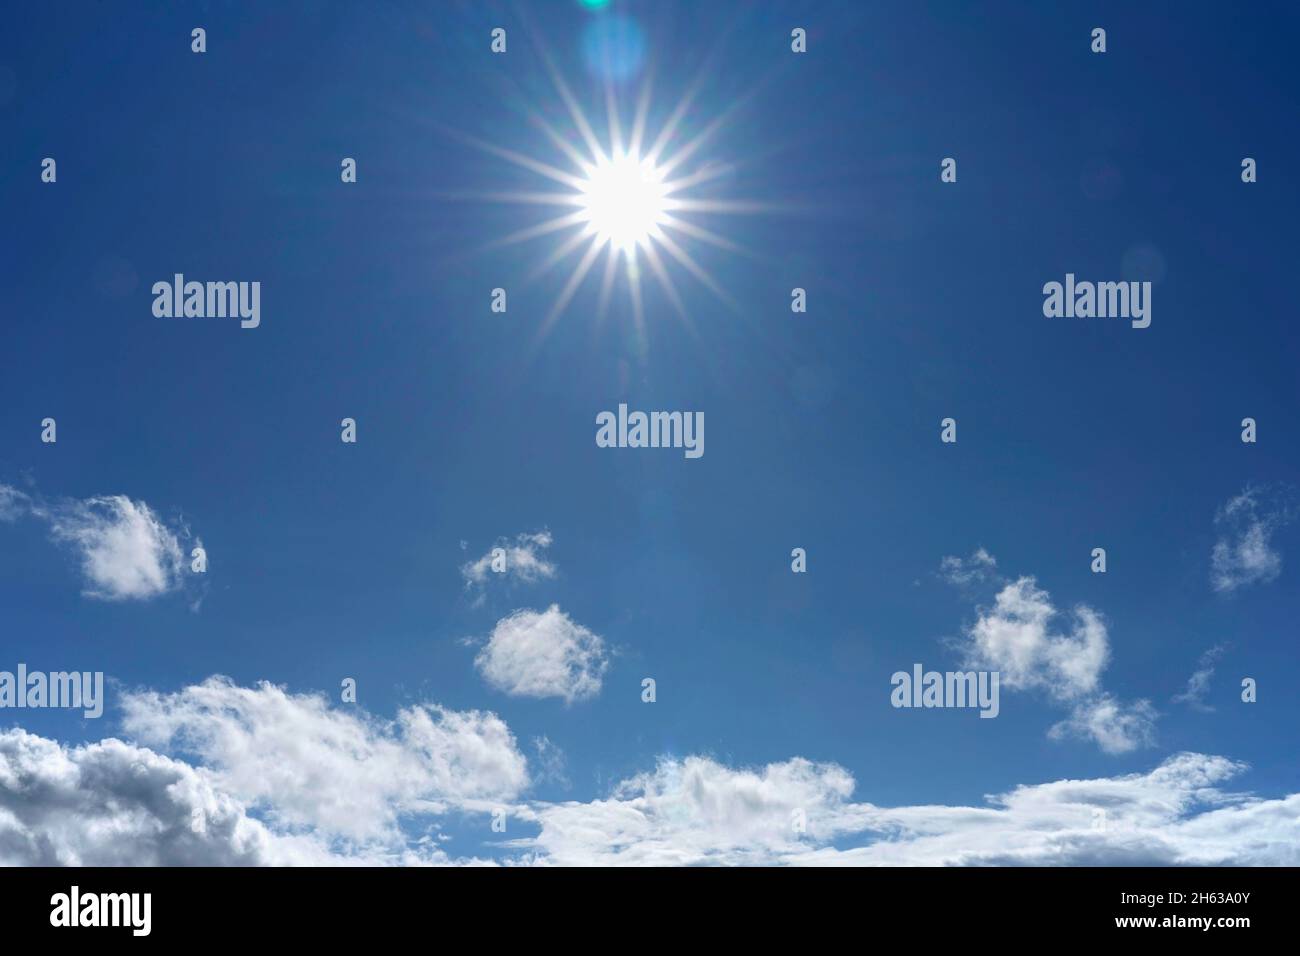 germany,bavaria,sun,sun star,blue sky with clouds Stock Photo